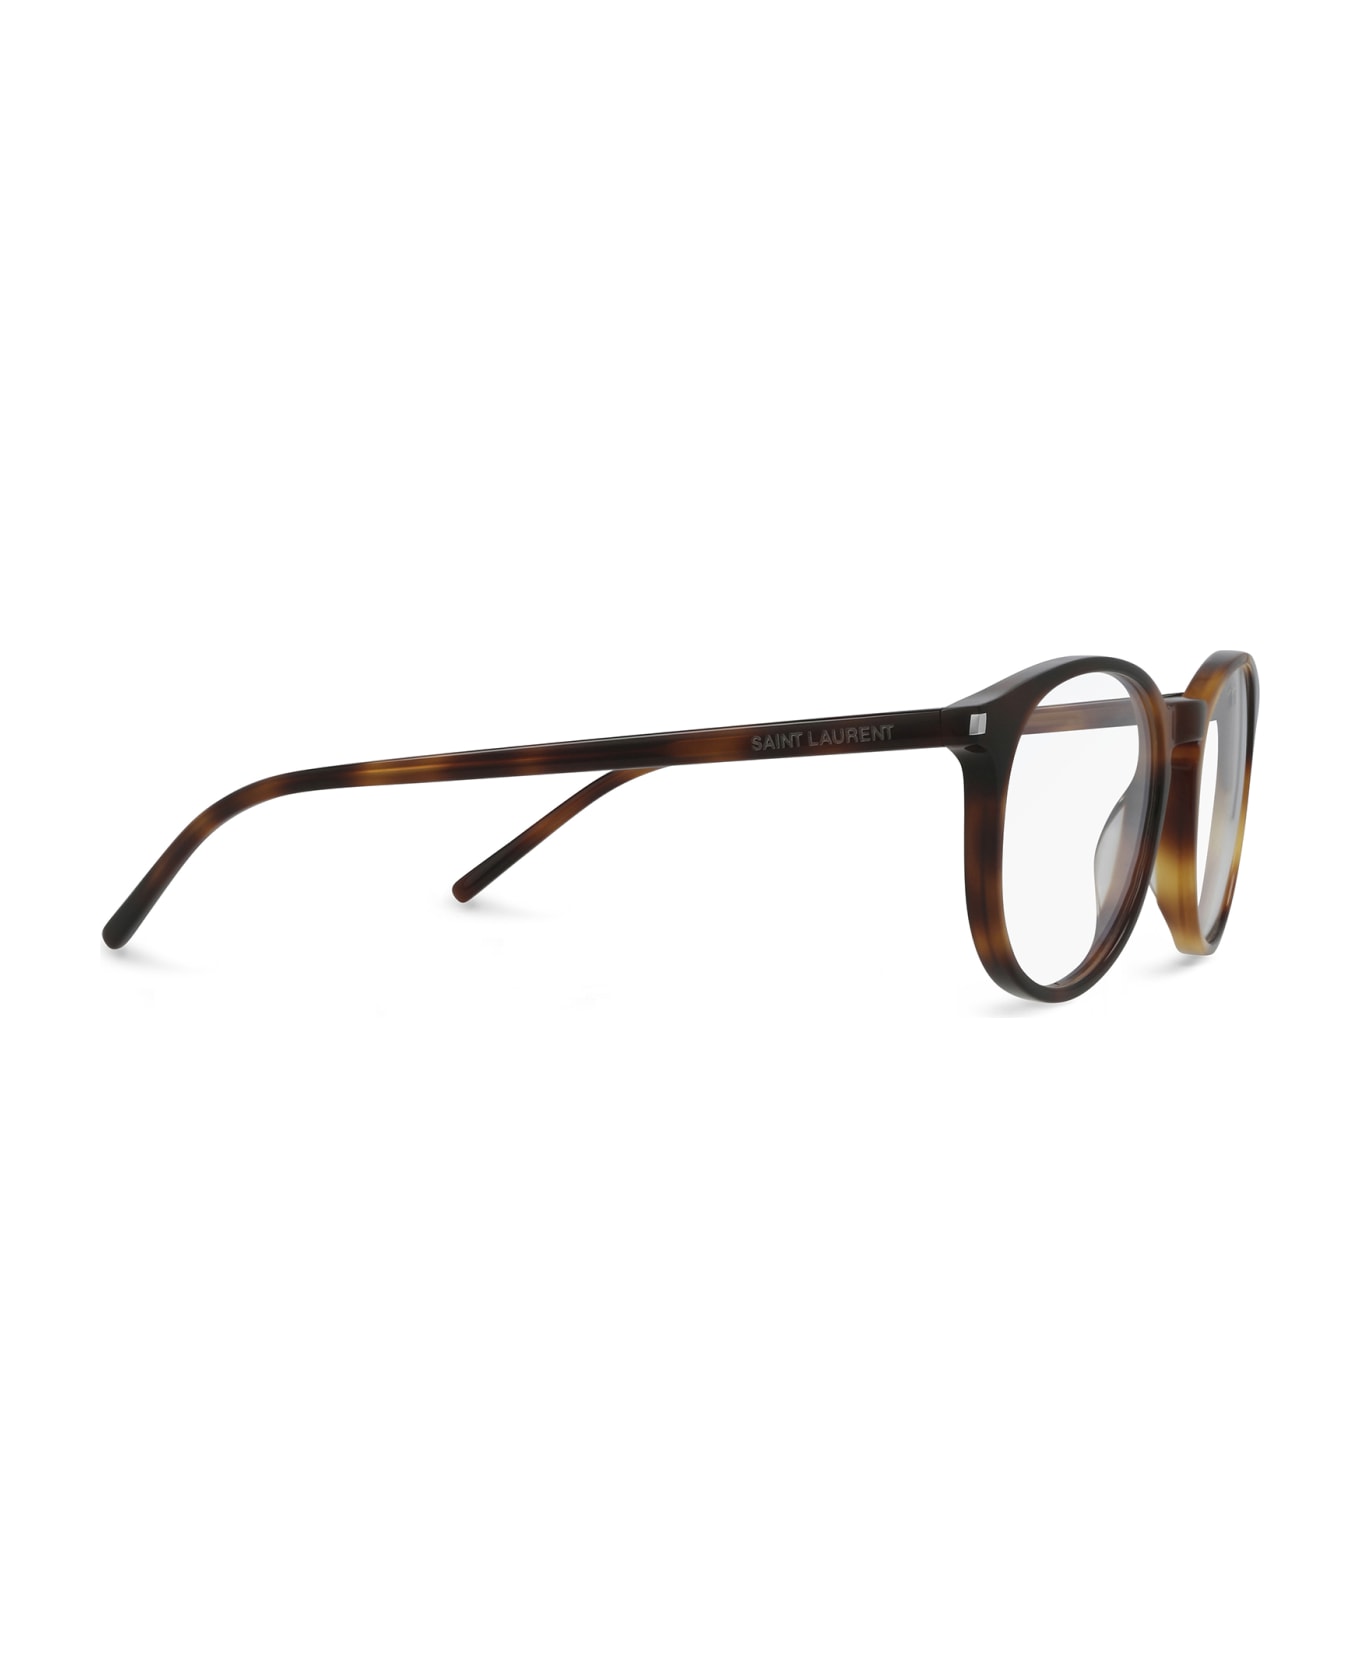 Saint Laurent Eyewear Sl 106 002 Glasses - 002